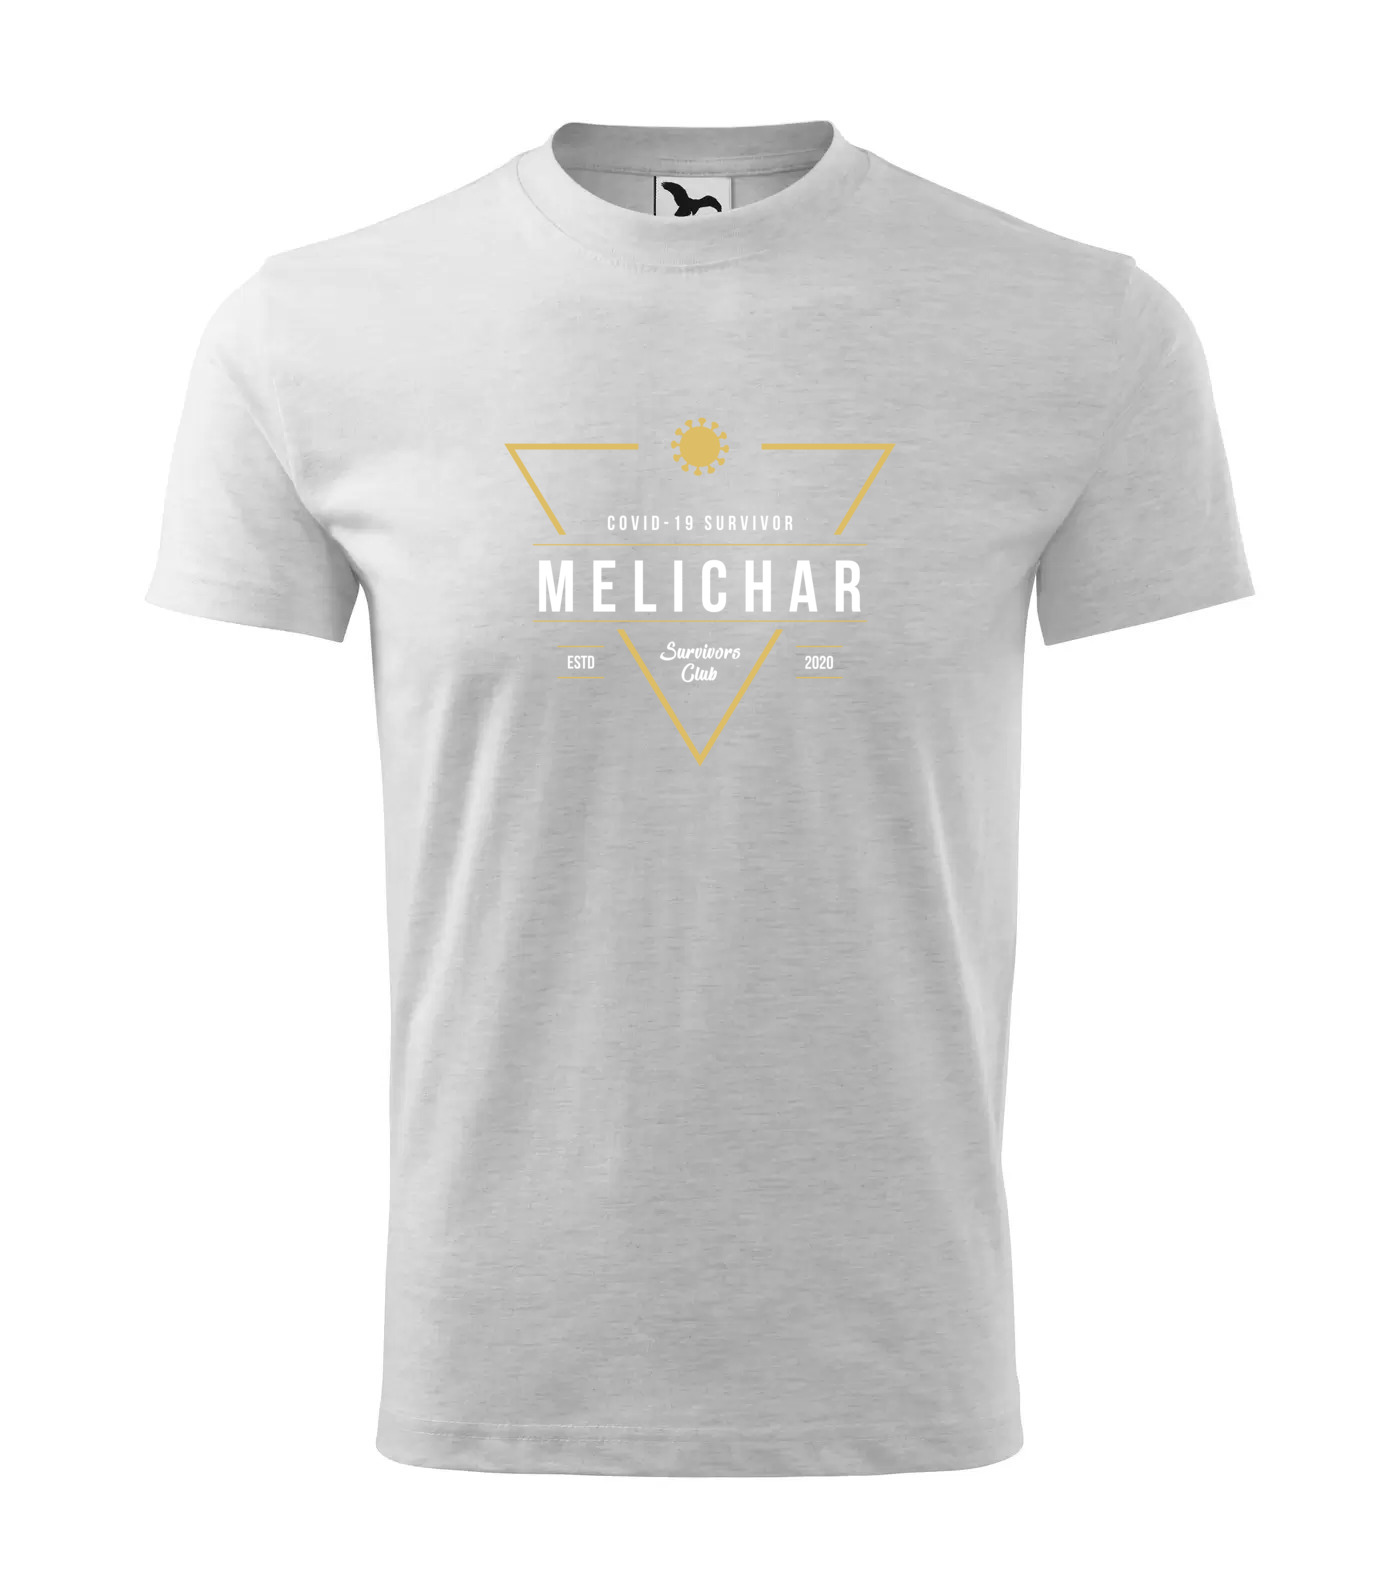 Tričko Survivor Club Melichar